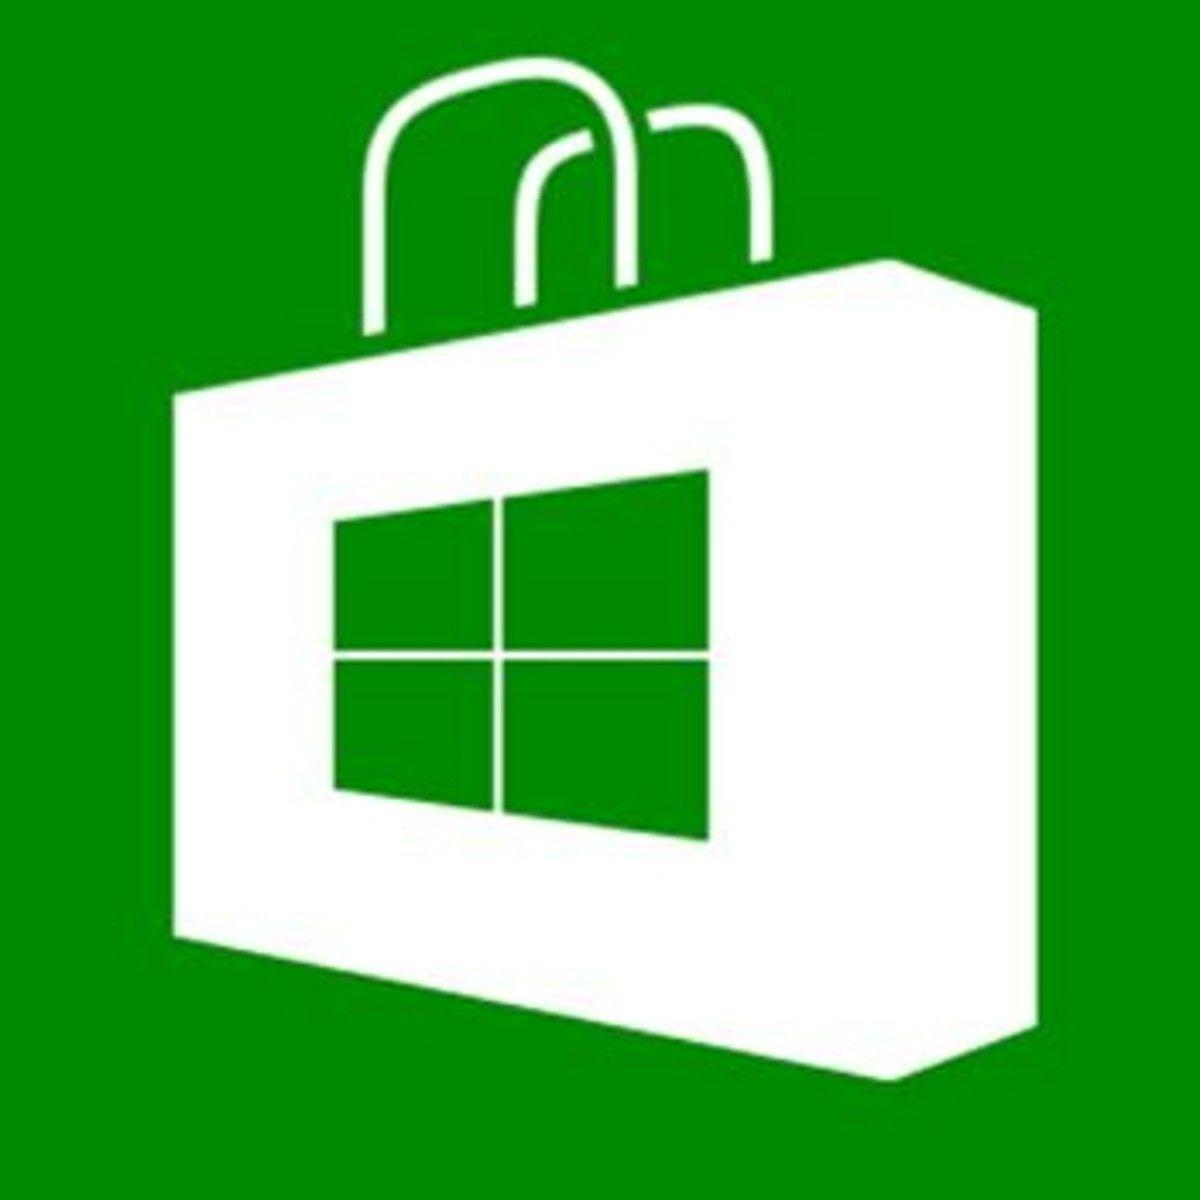 Windows App Store Logo - Microsoft's Windows 8 store reaches 100k apps in seven months